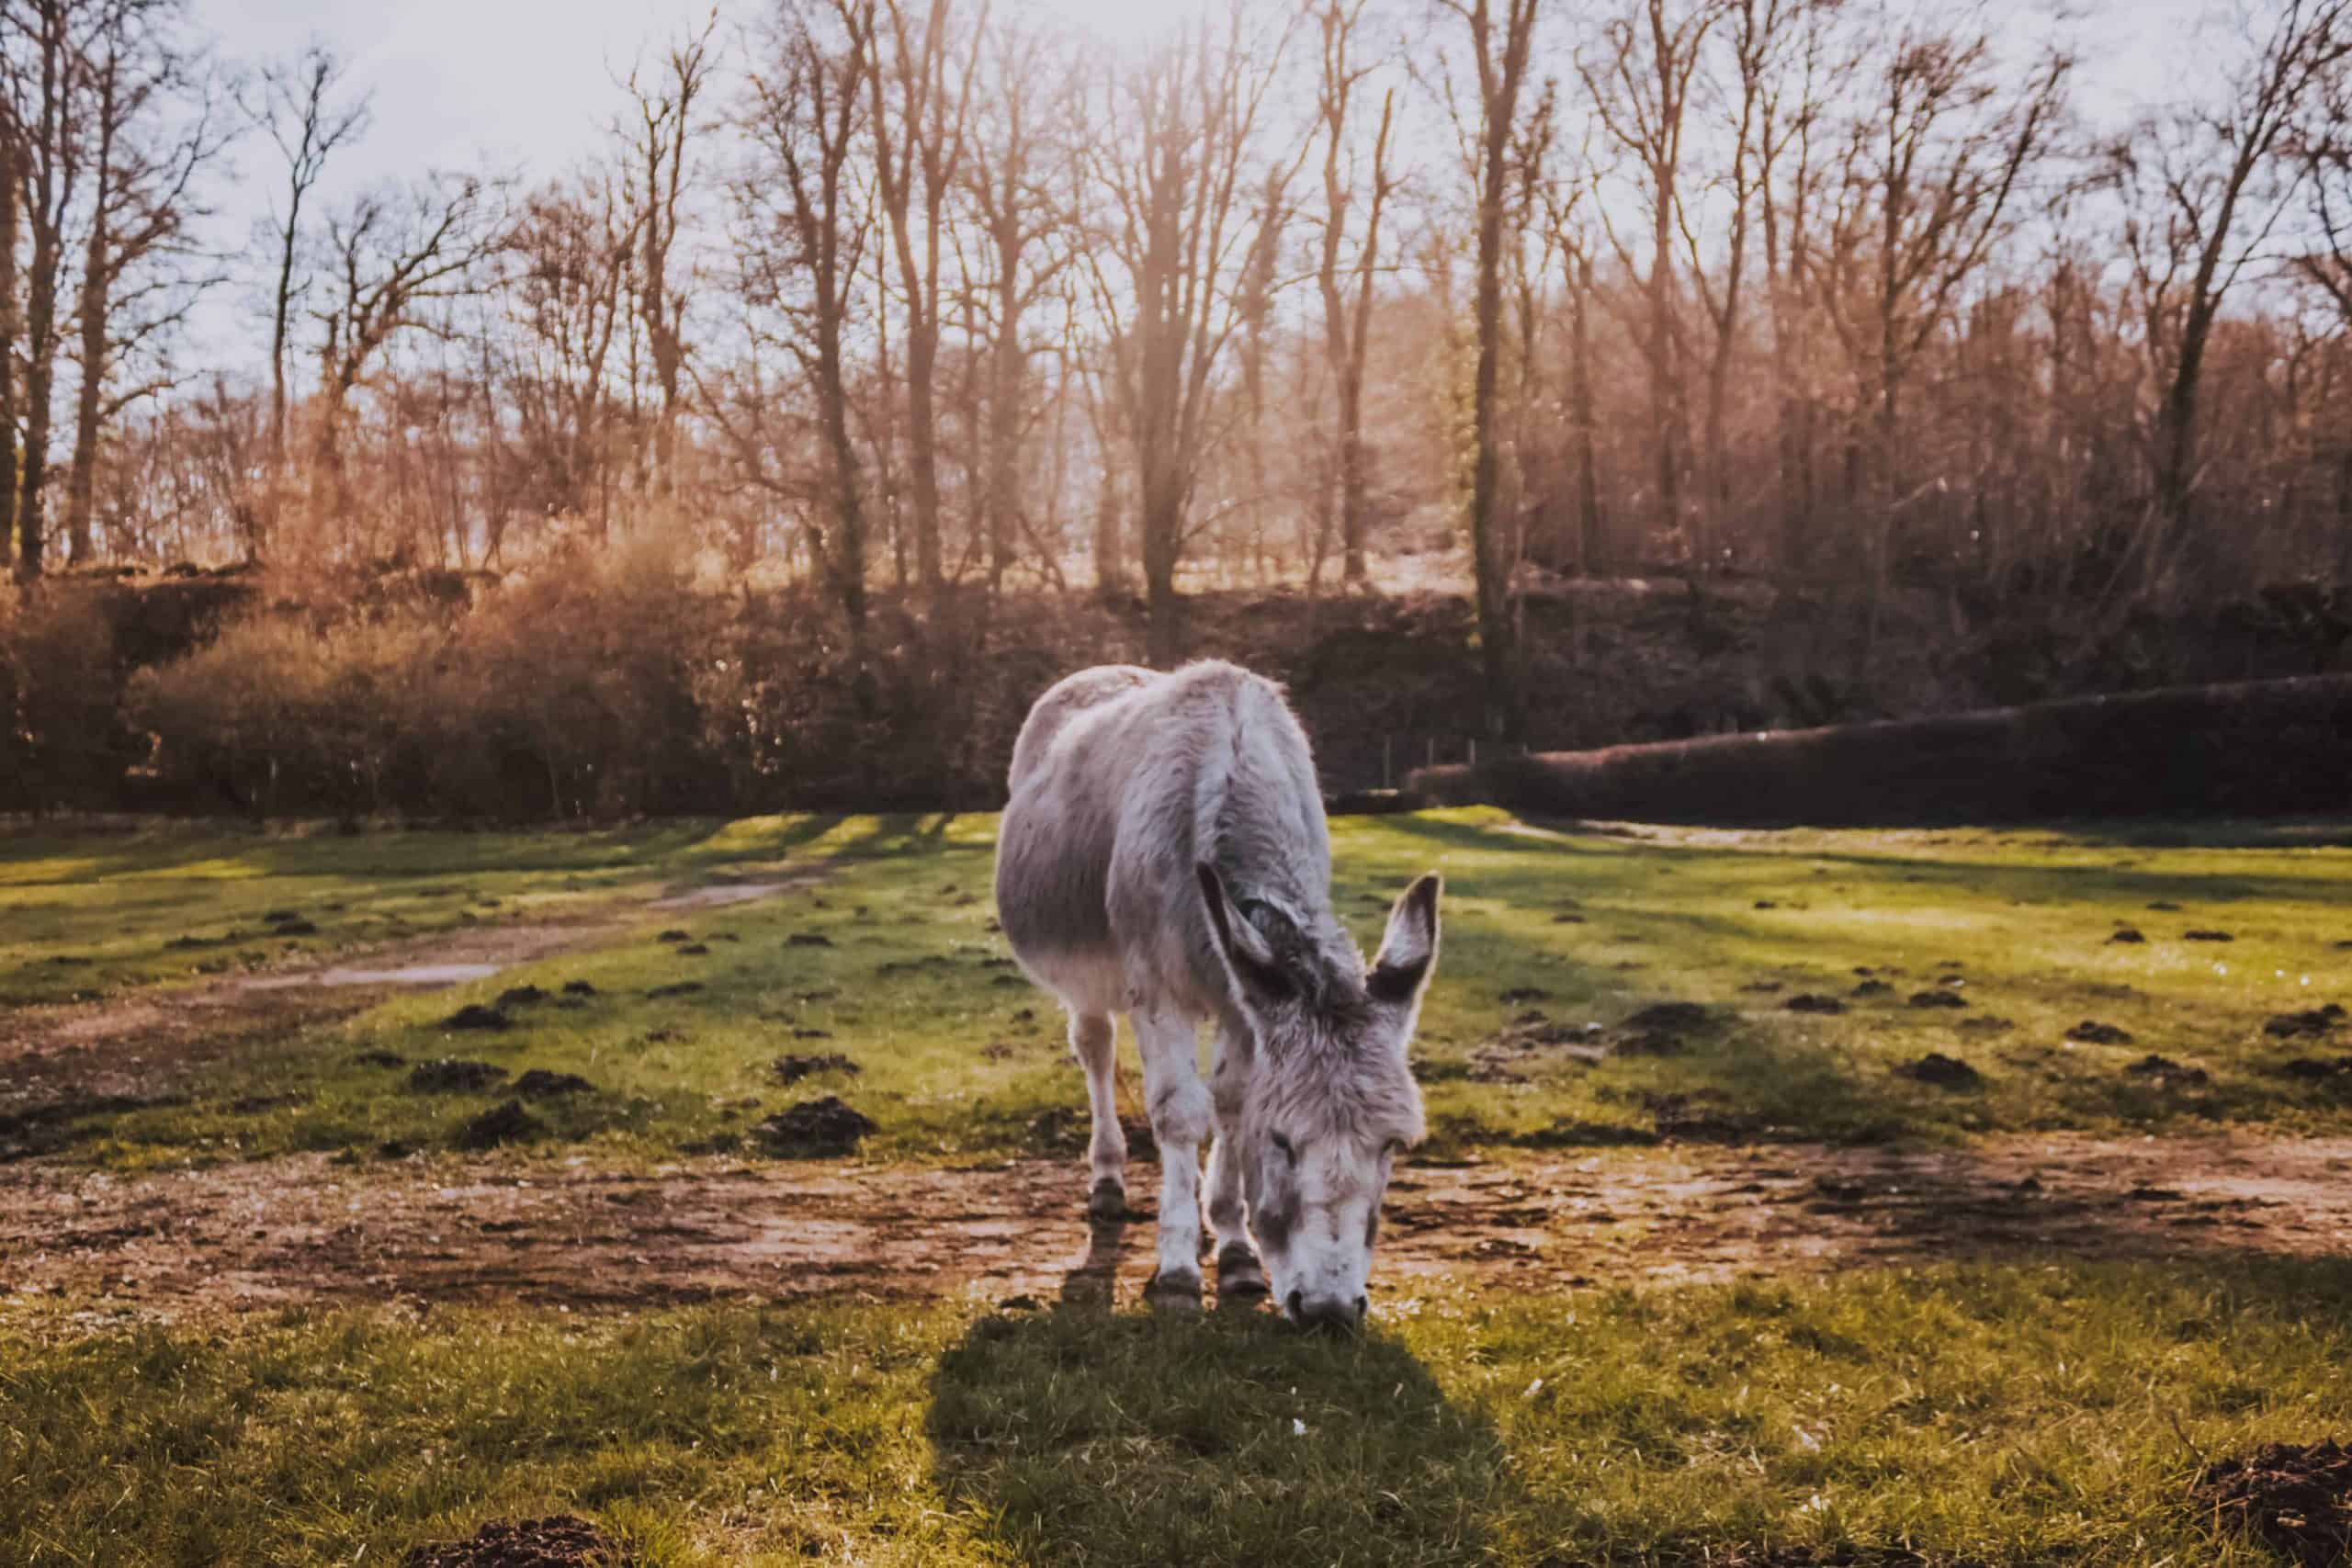 A donkey grazing in a grassy field.